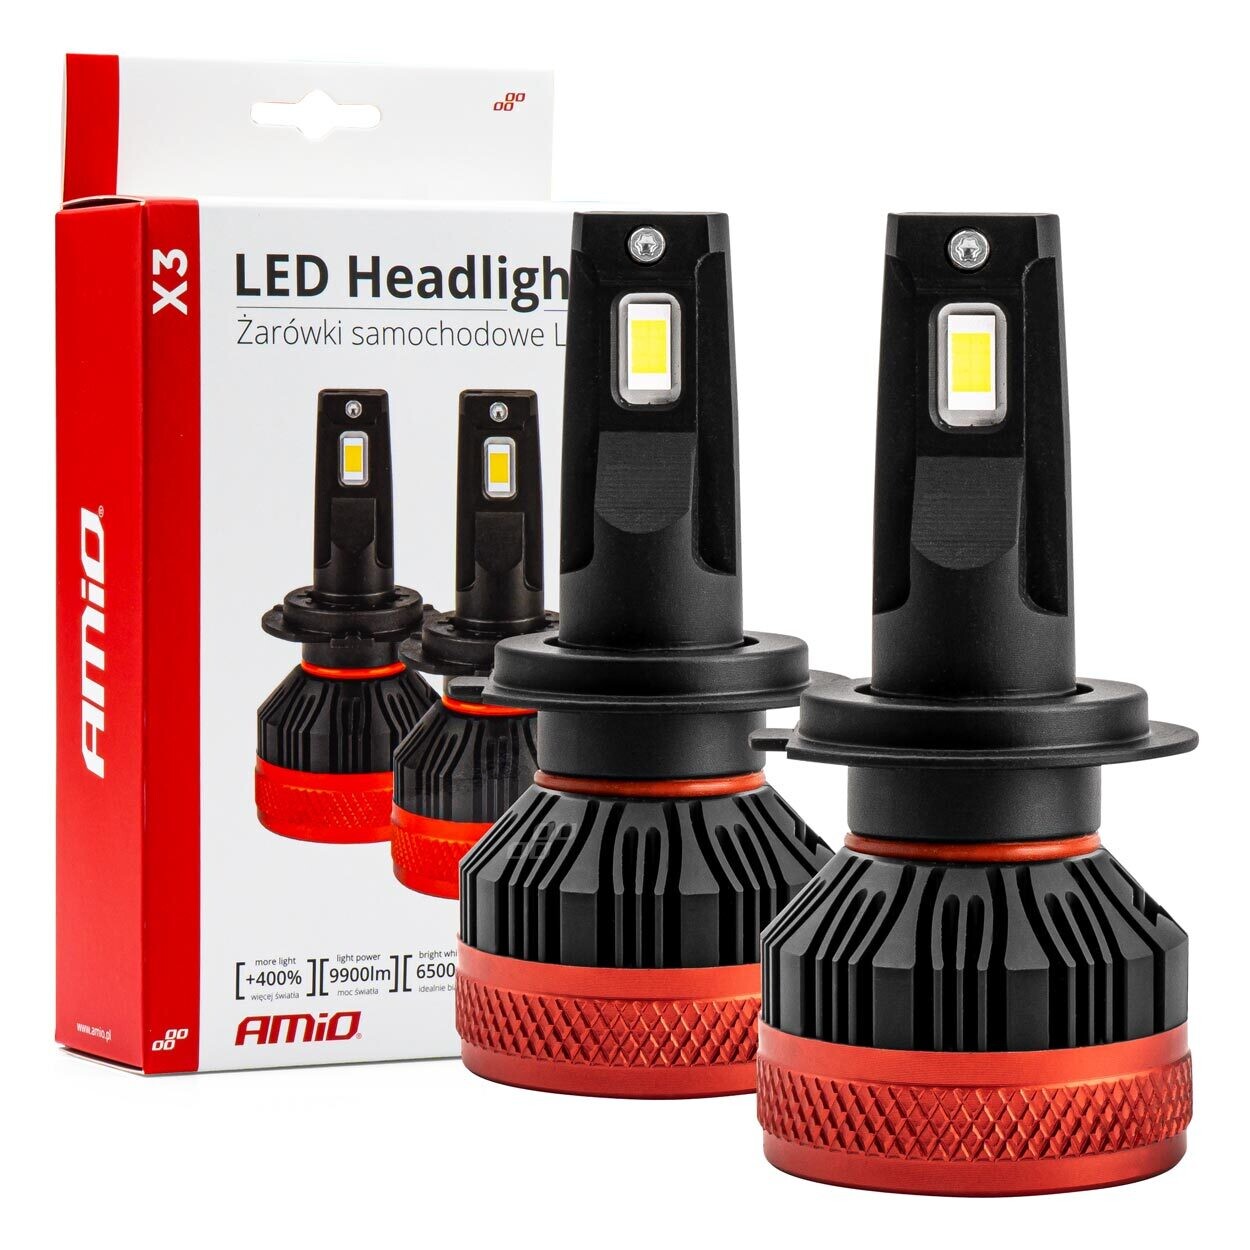 LED Headlight H7 X3 Series AMiO